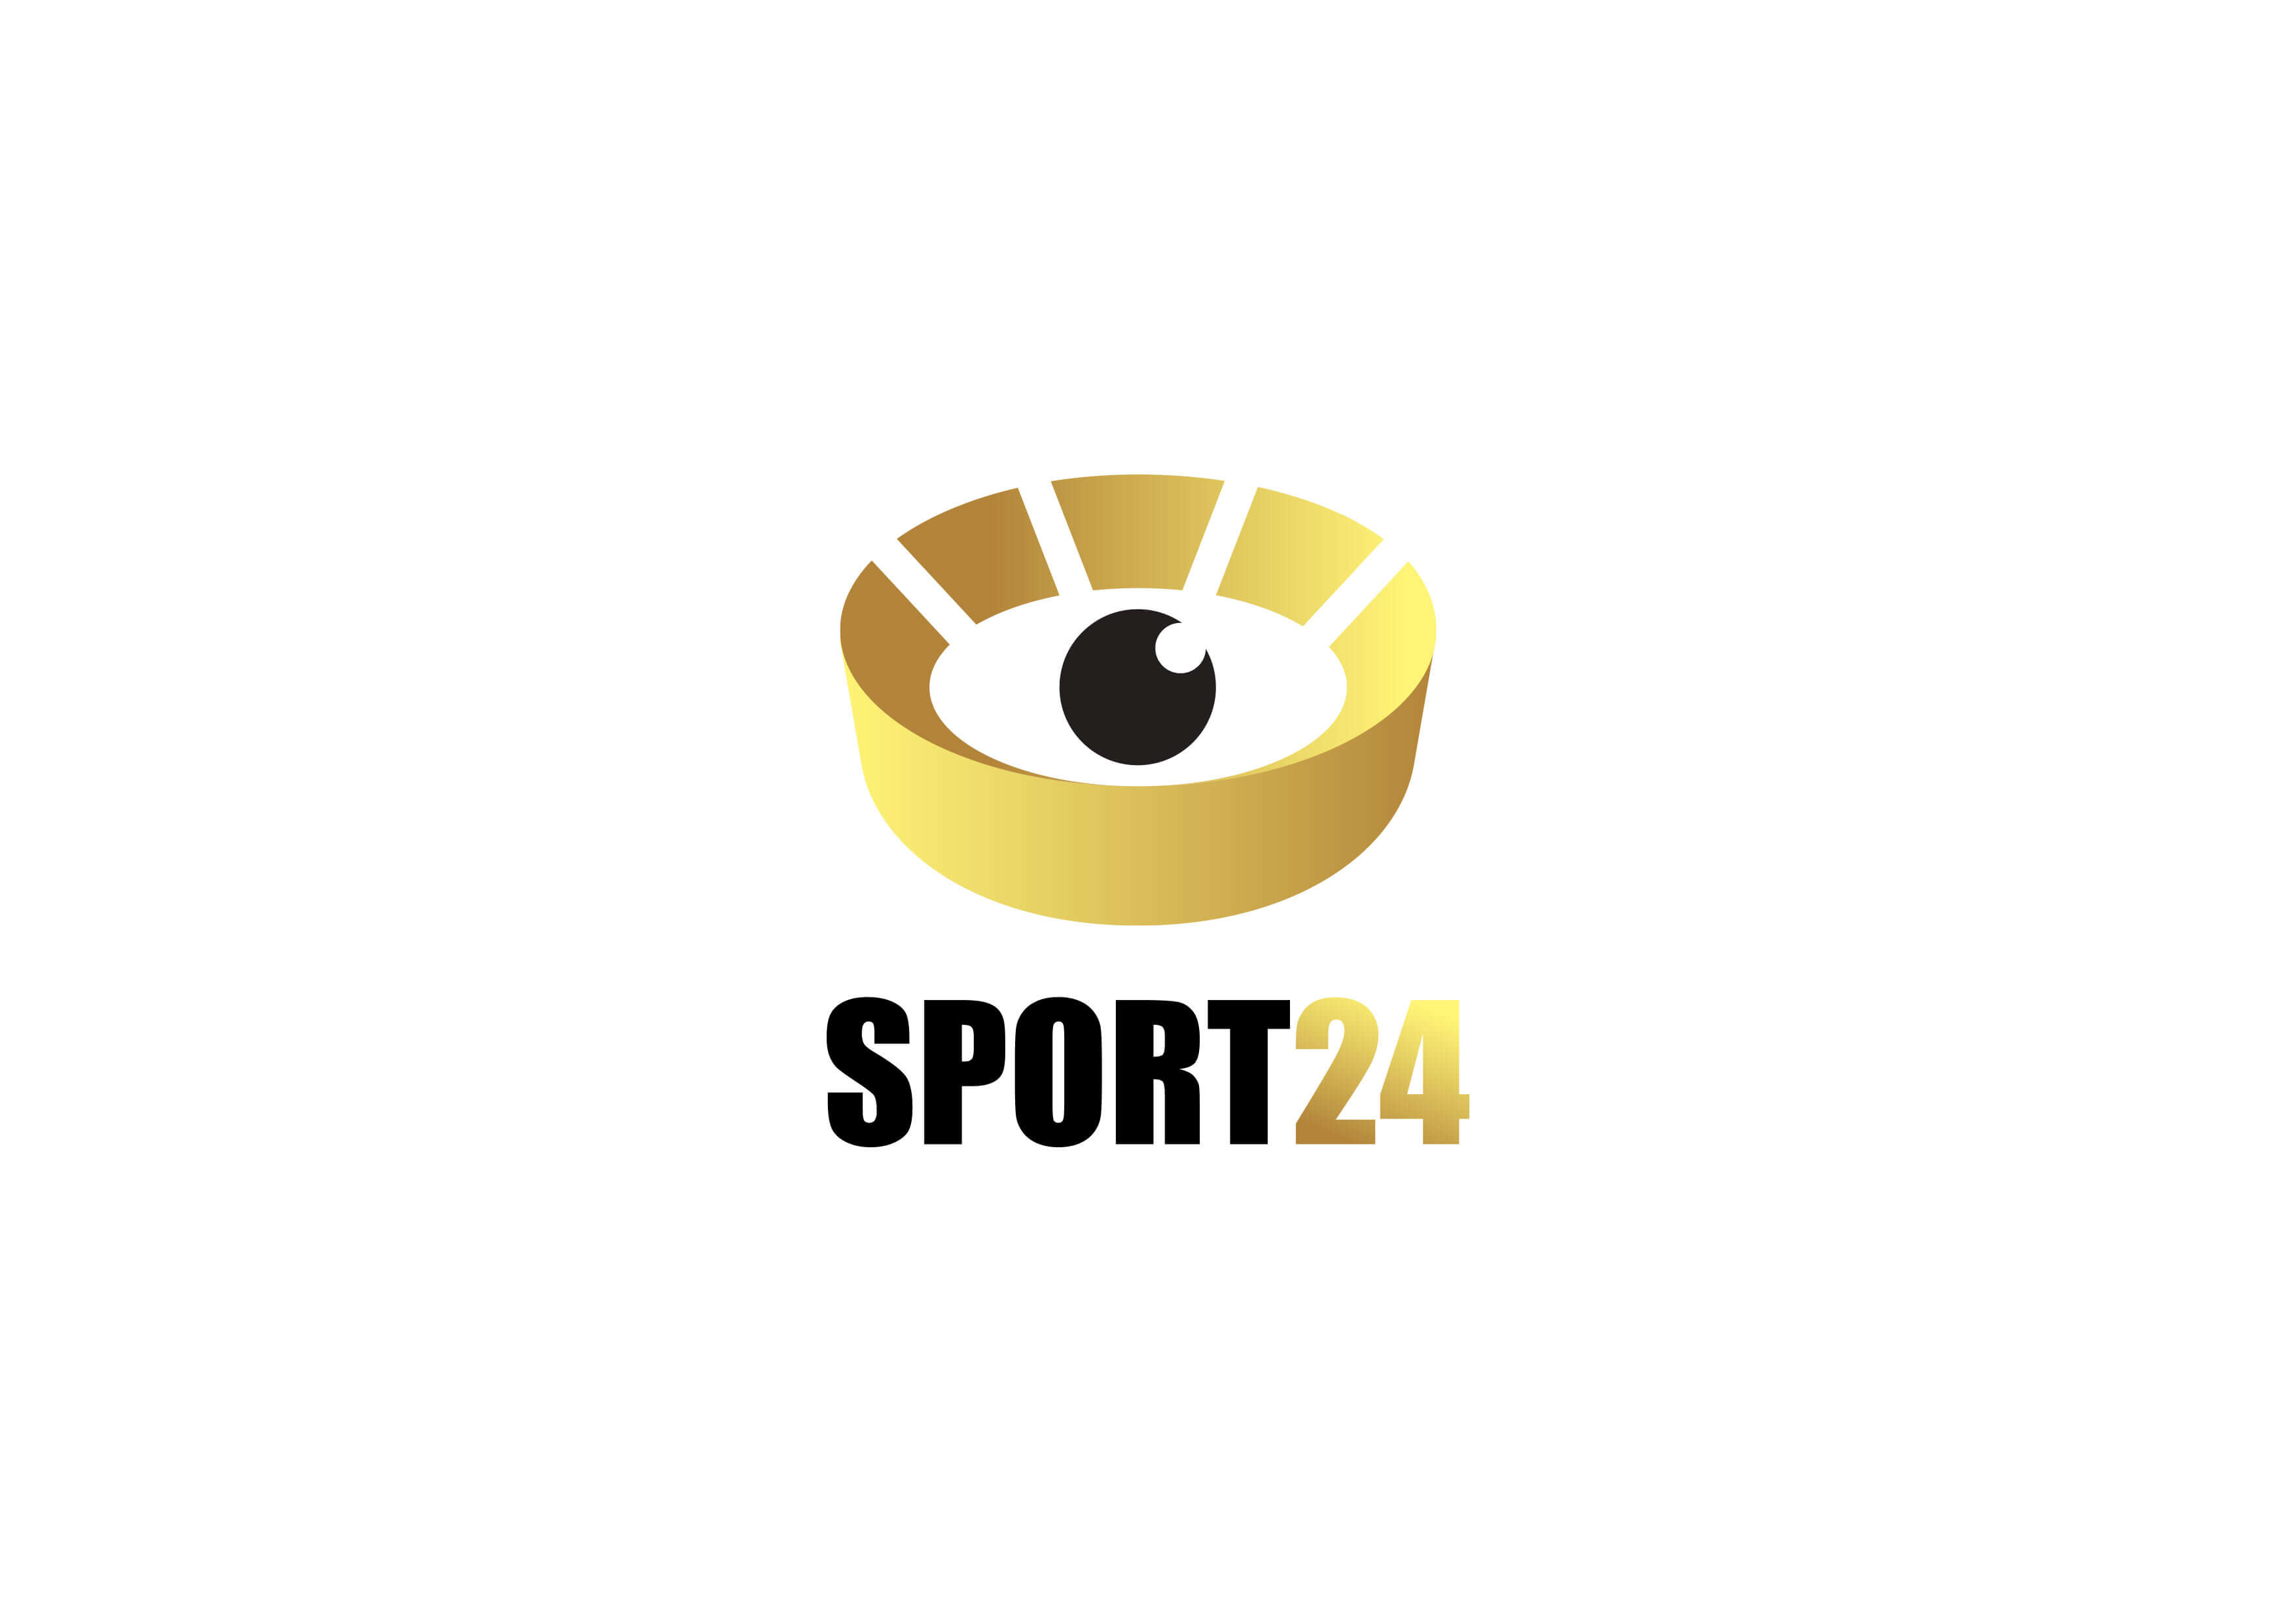 sport24 identity process 12